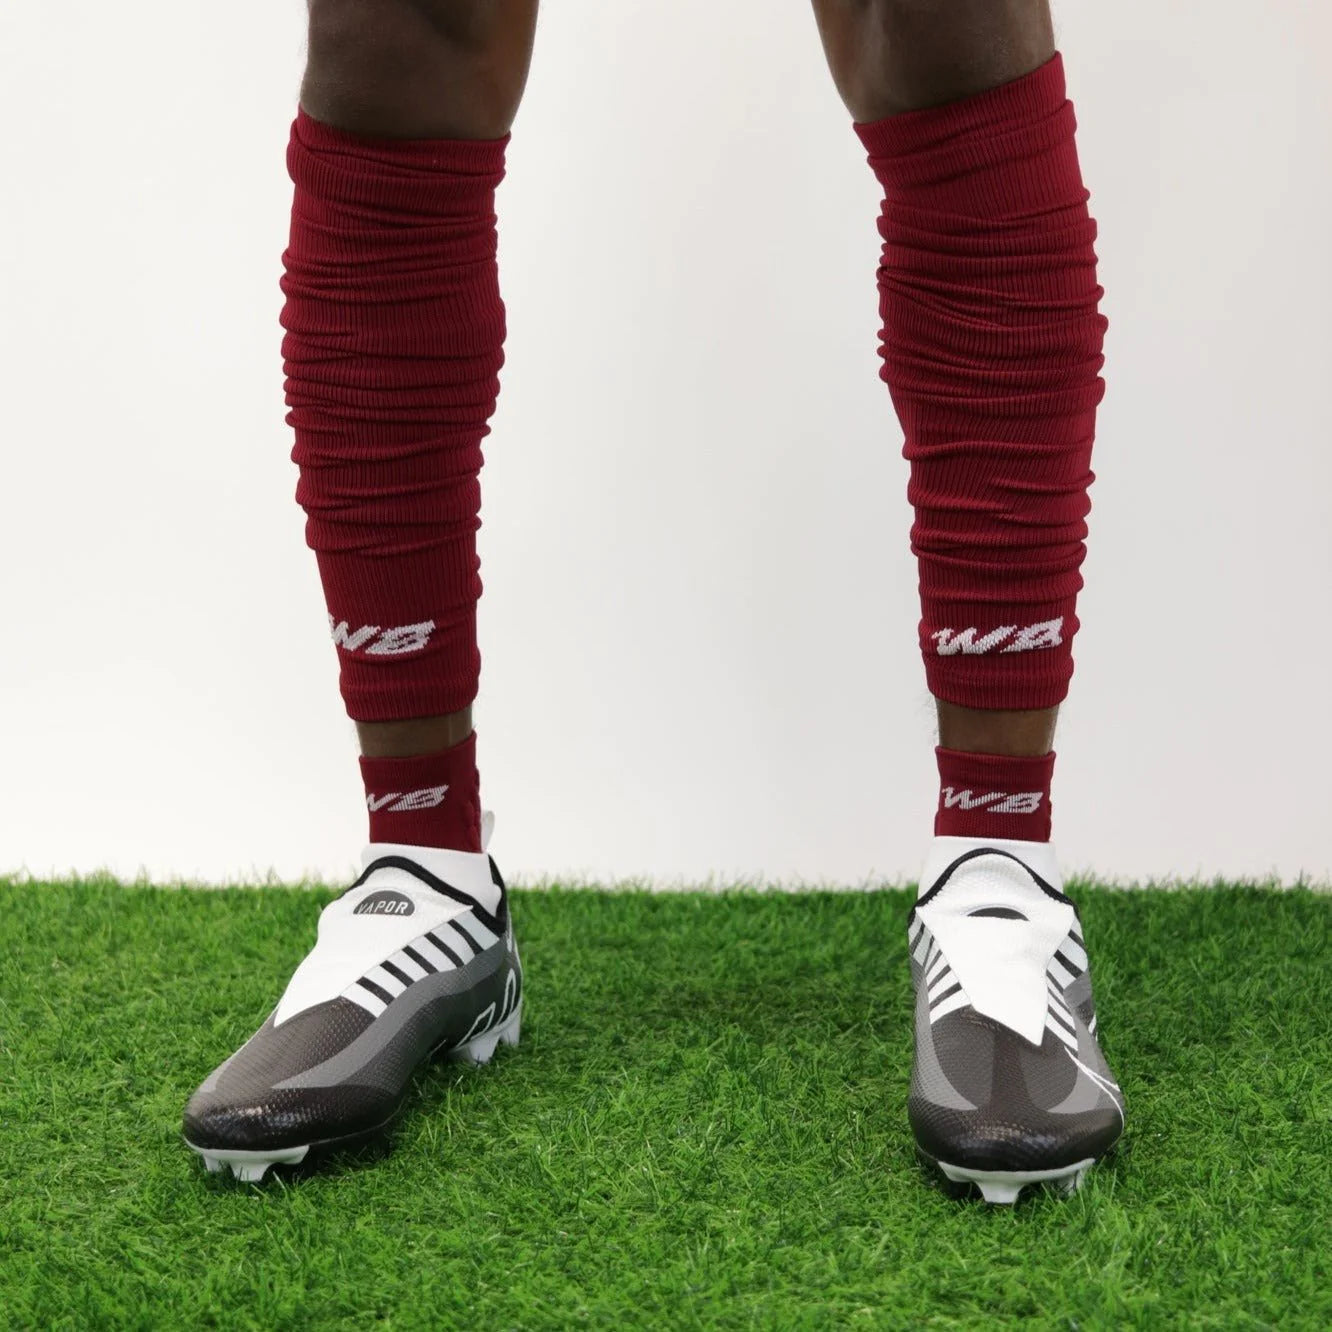 WeBall Football Leg Sleeves 2.0